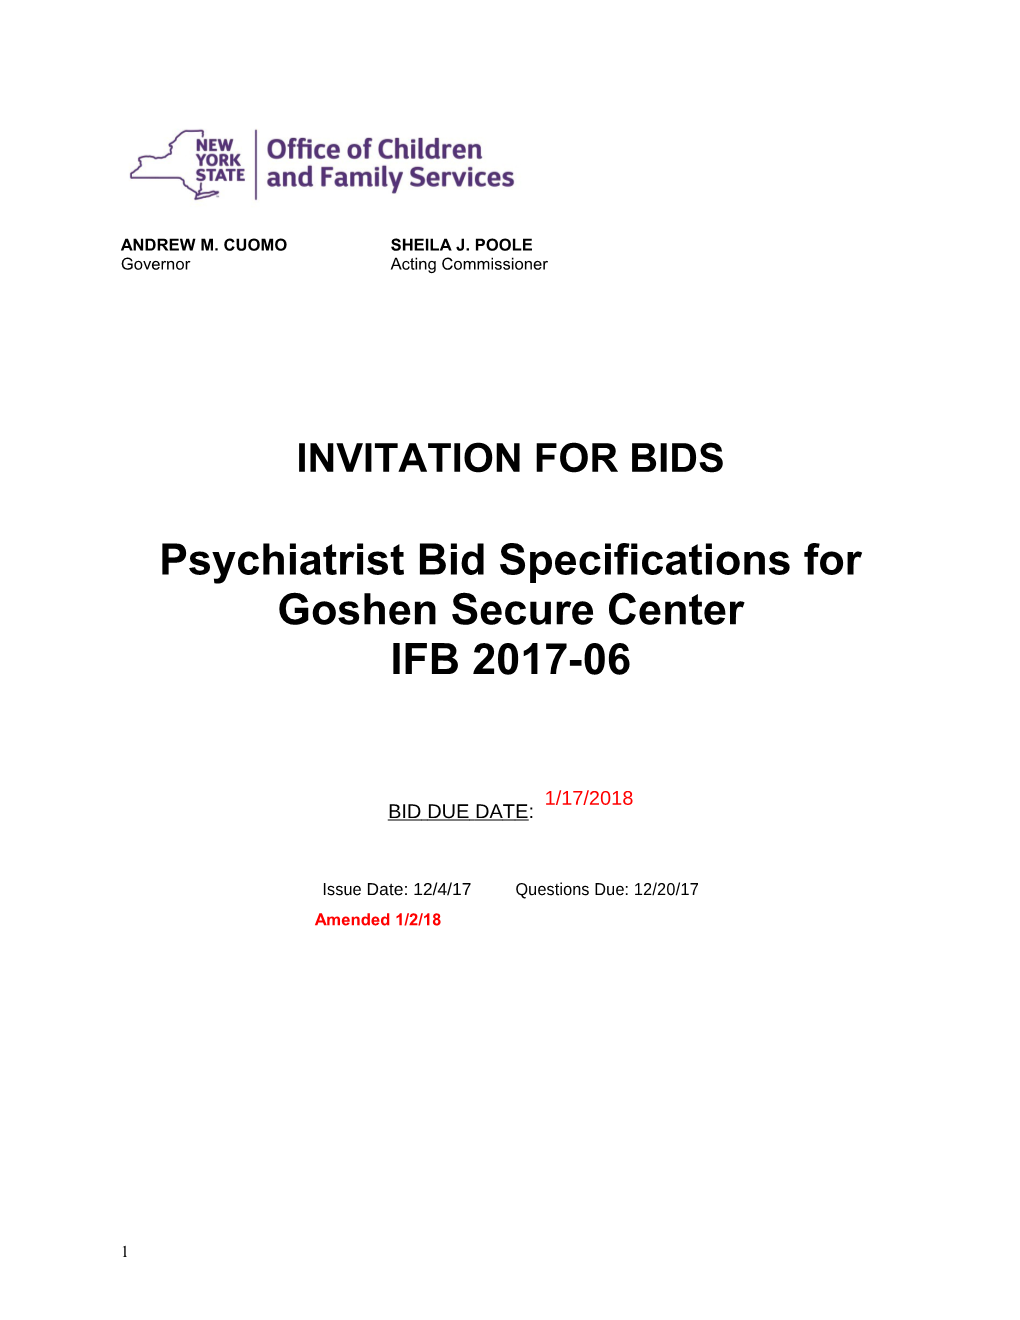 Psychiatrist Bid Specifications for Goshen Secure Center